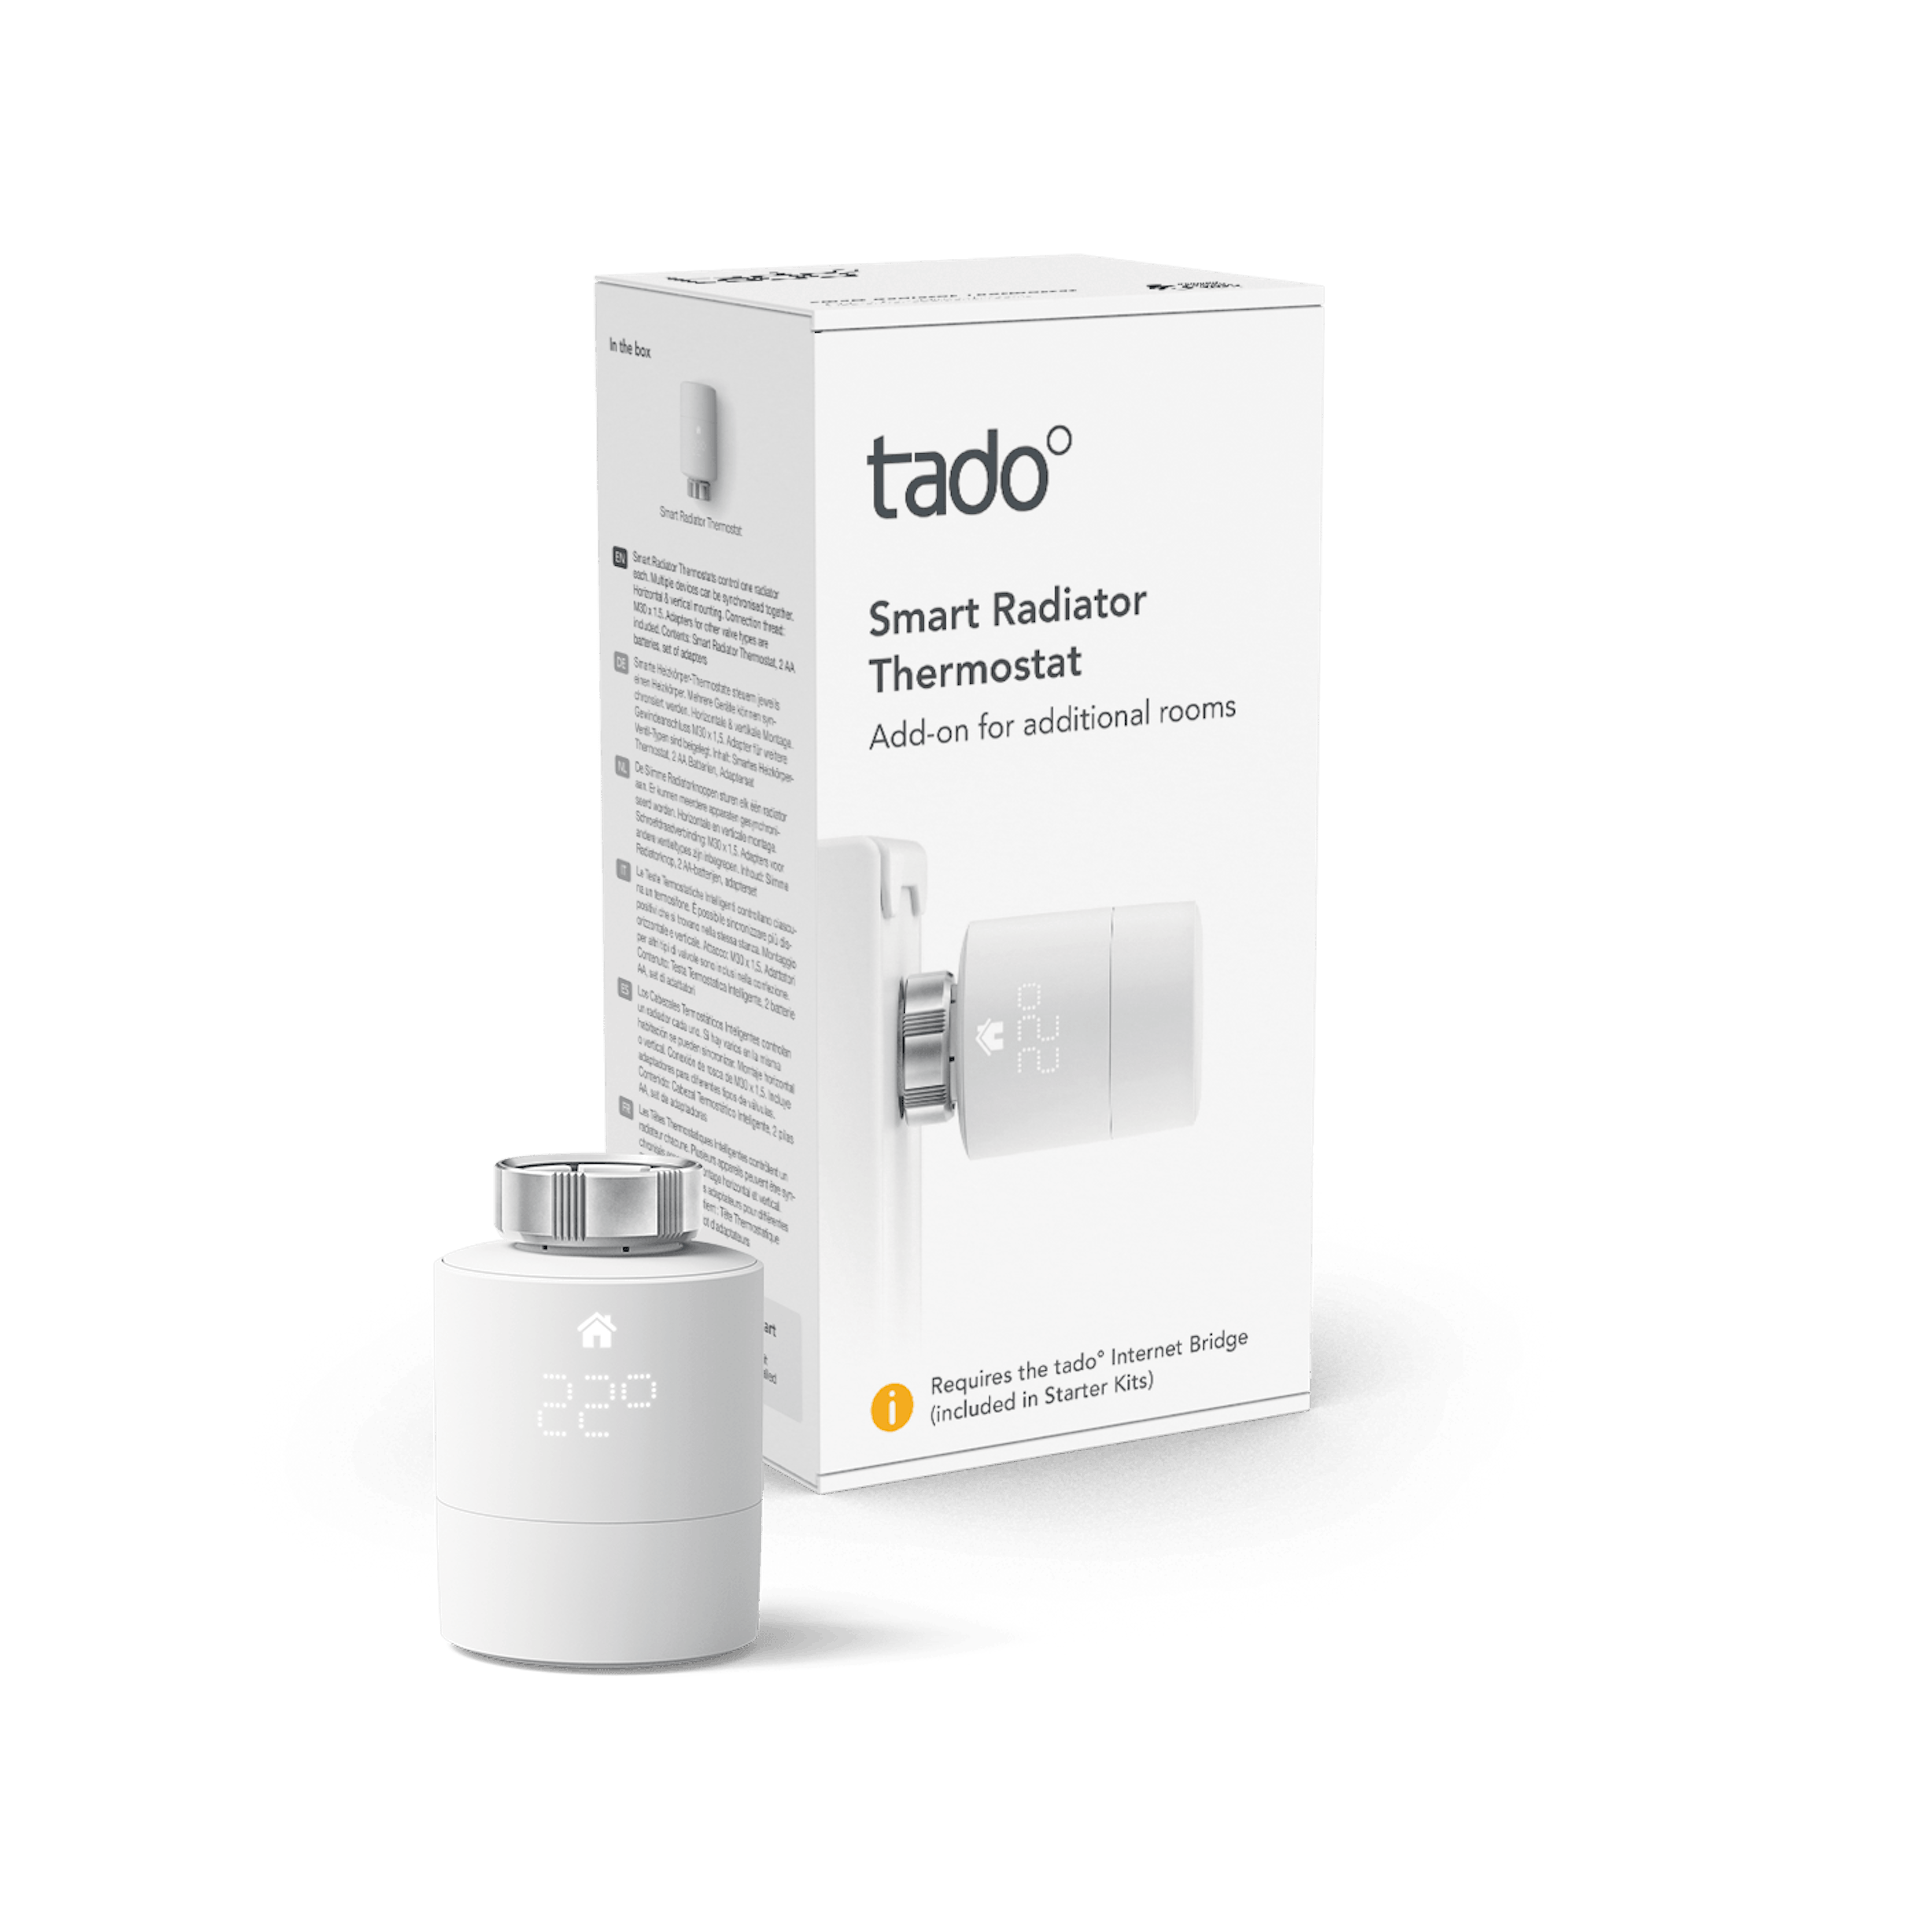 tado° Smart Radiator Thermostat V2 - Image 2